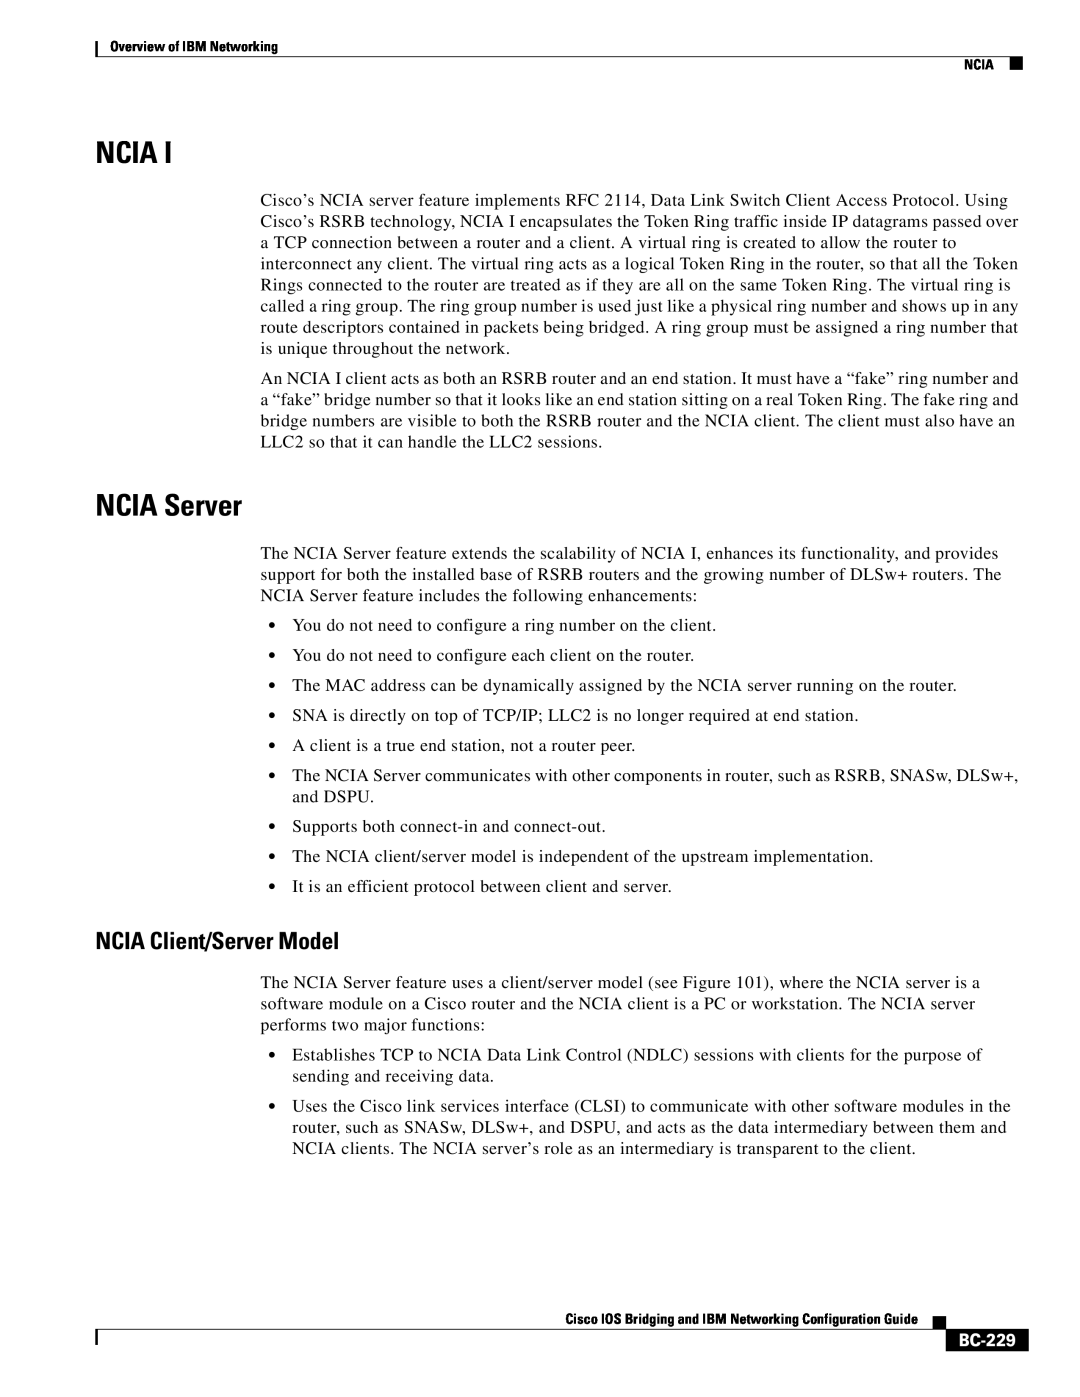 IBM BC-203 manual Ncia, NCIA Server, NCIA Client/Server Model, BC-229 